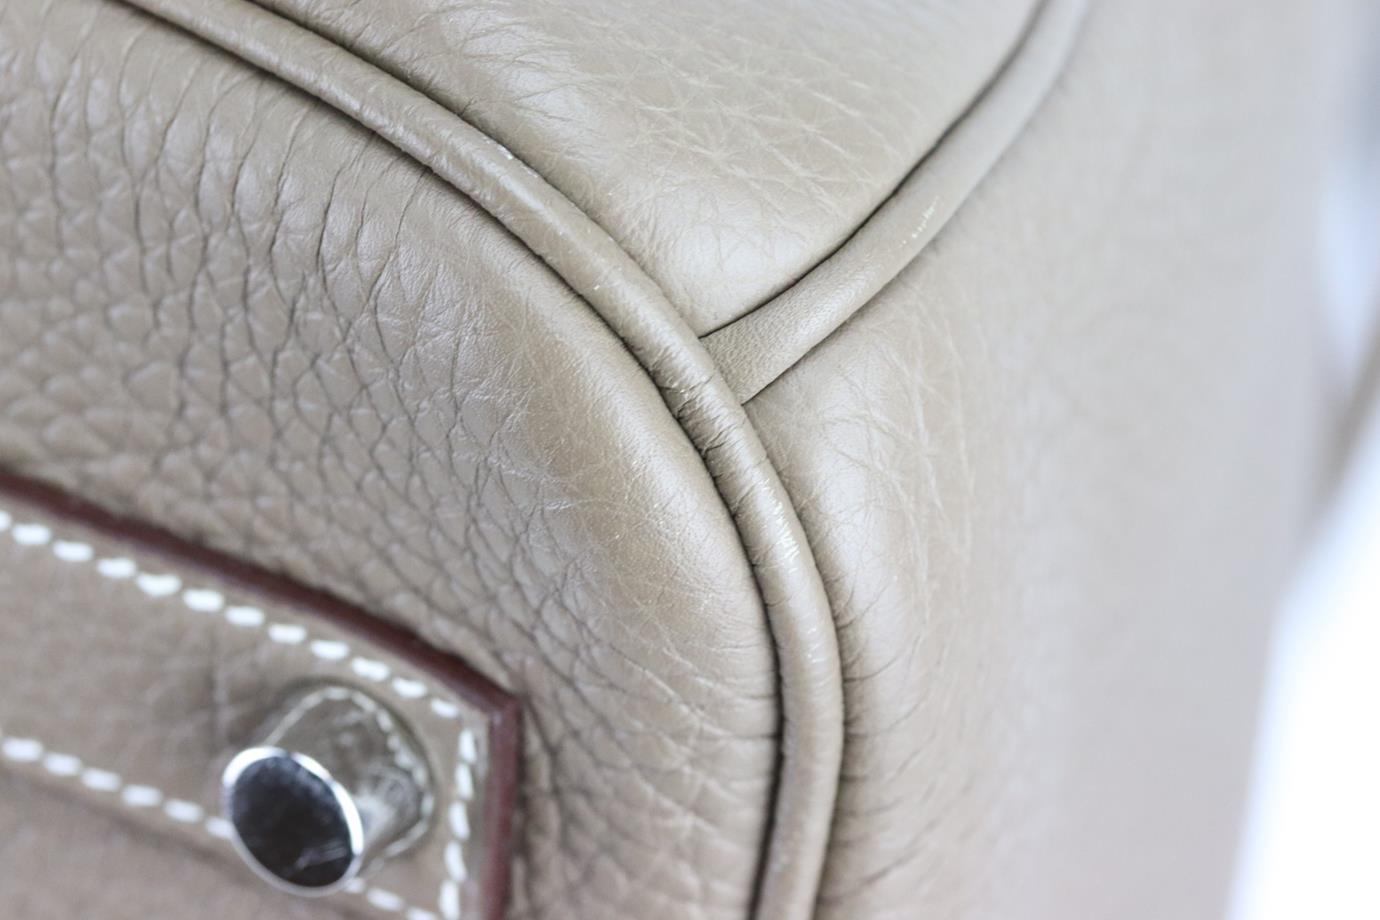 Hermès 2011 Birkin 35cm Togo Leather Bag For Sale 3